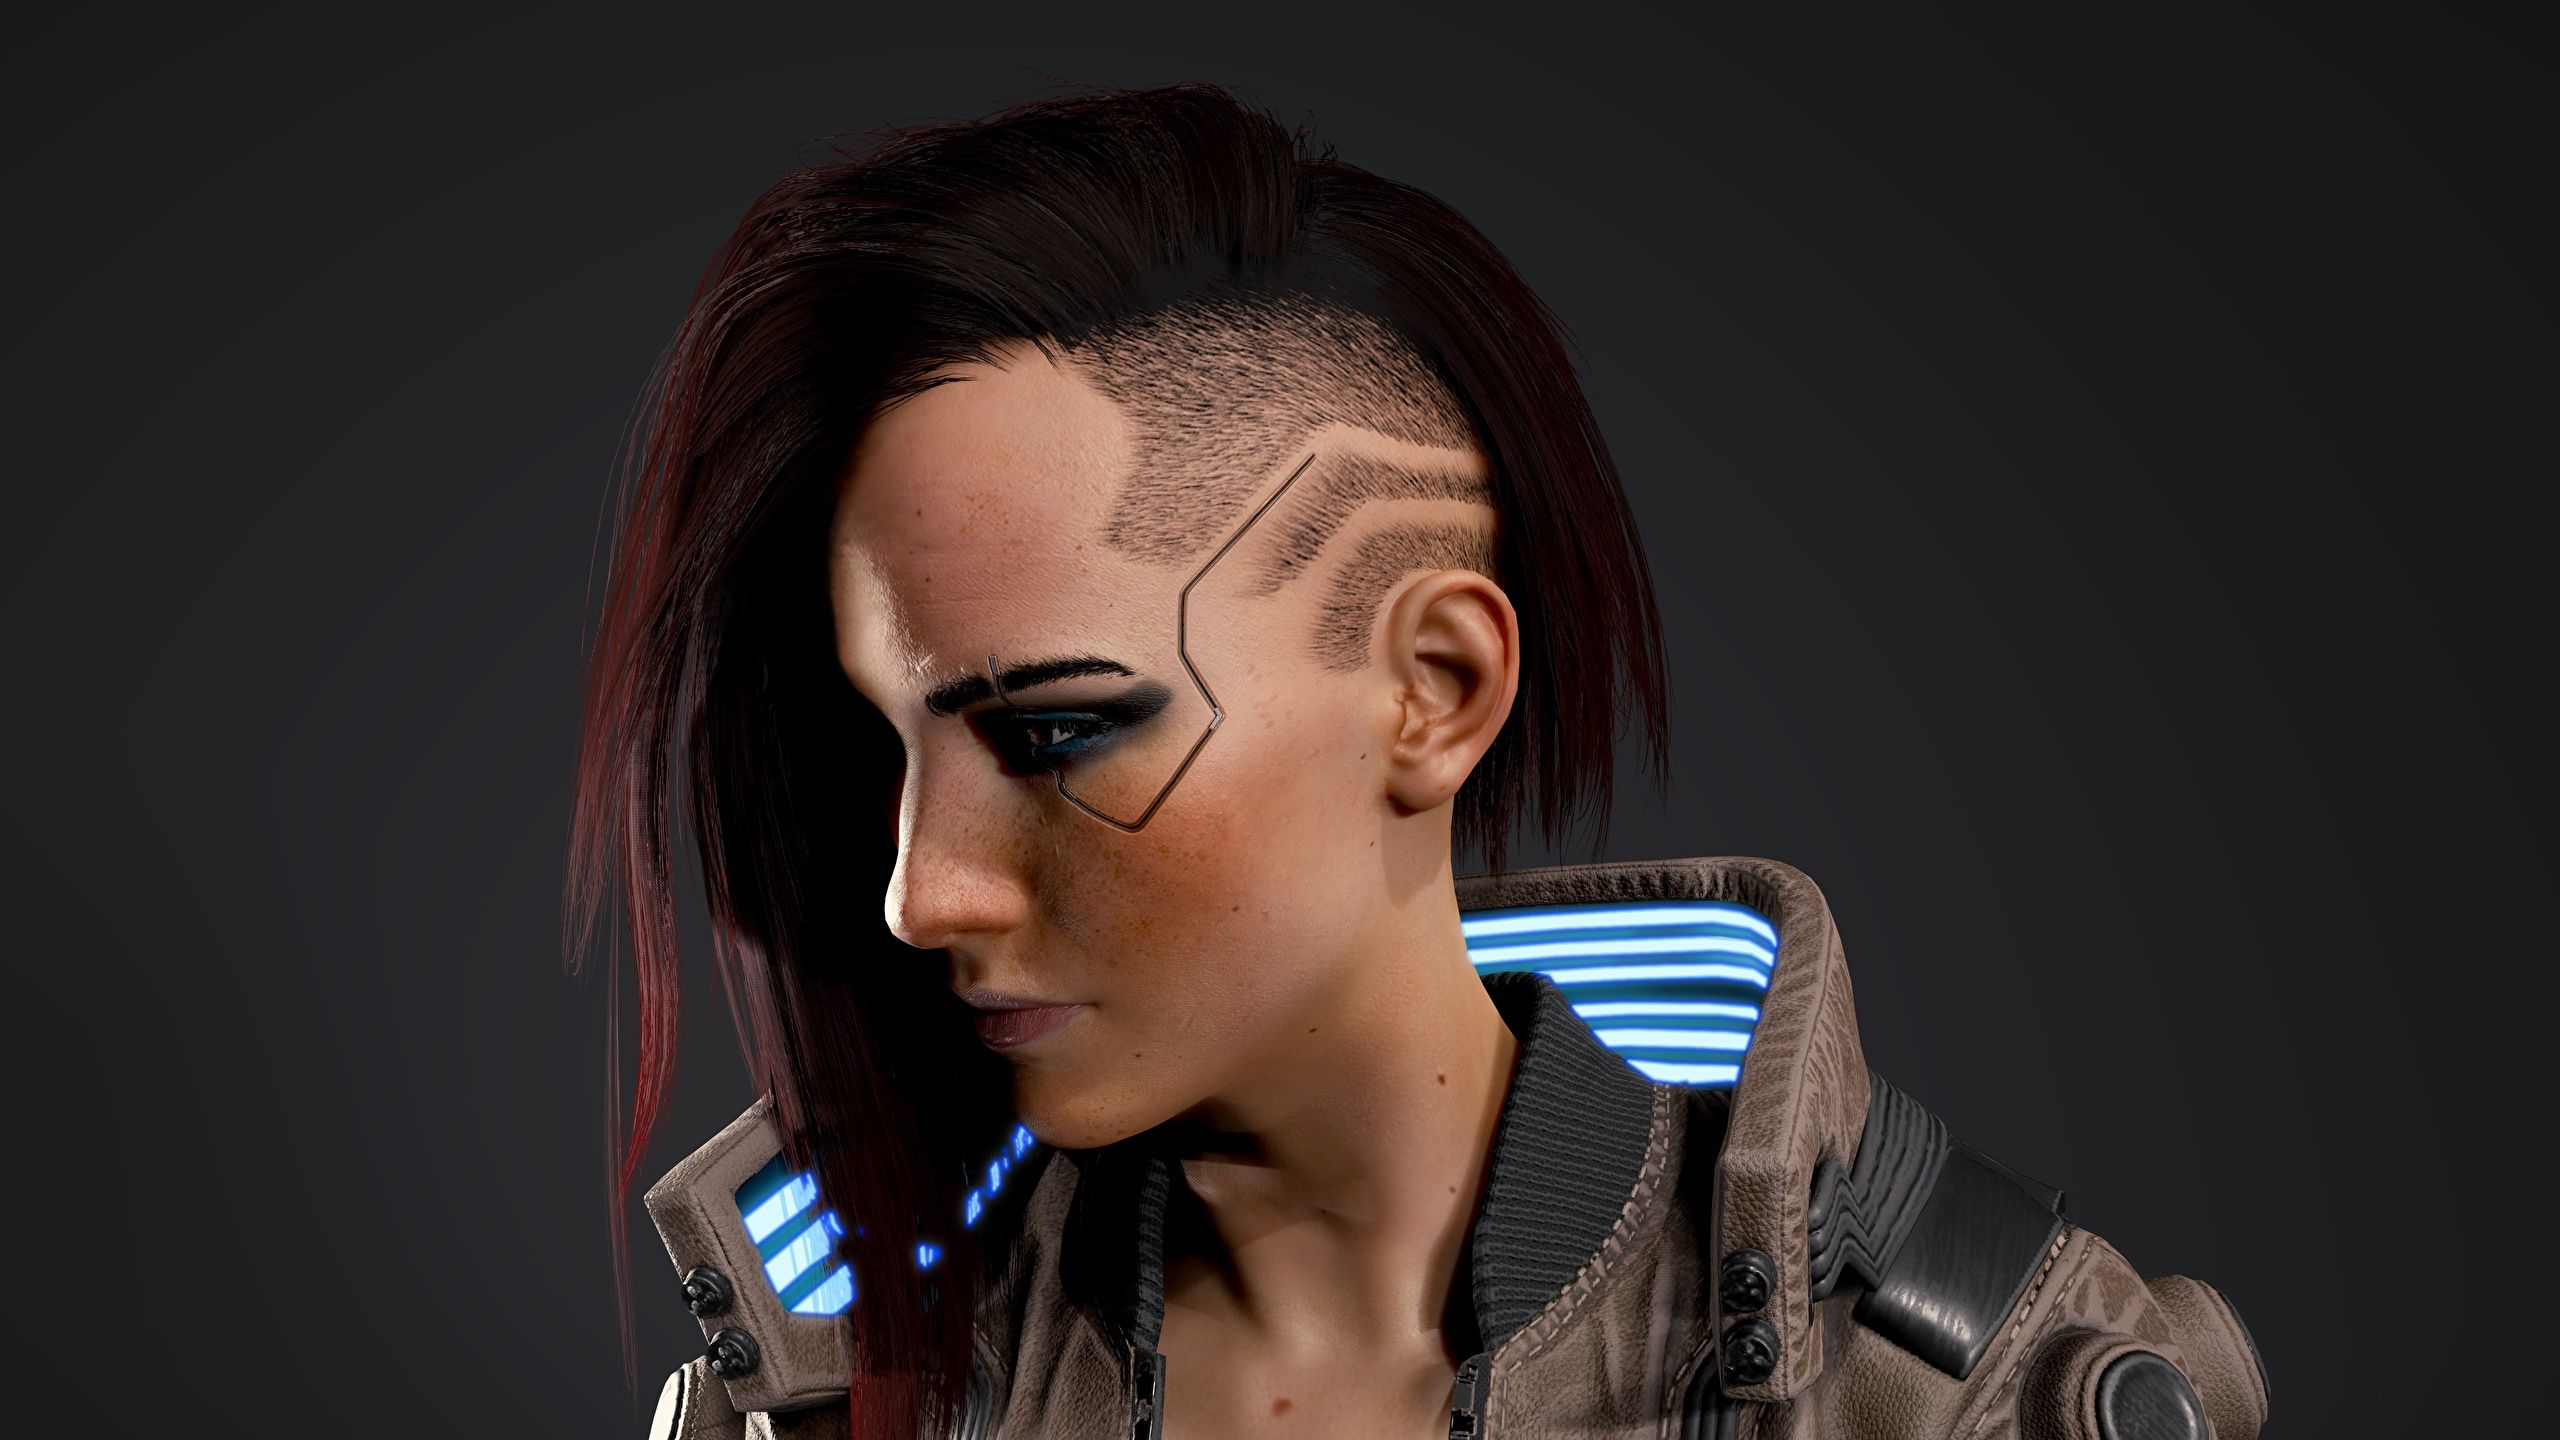 Picture Cyberpunk 2077 Cyborg haircut Face Hair young 2560x1440